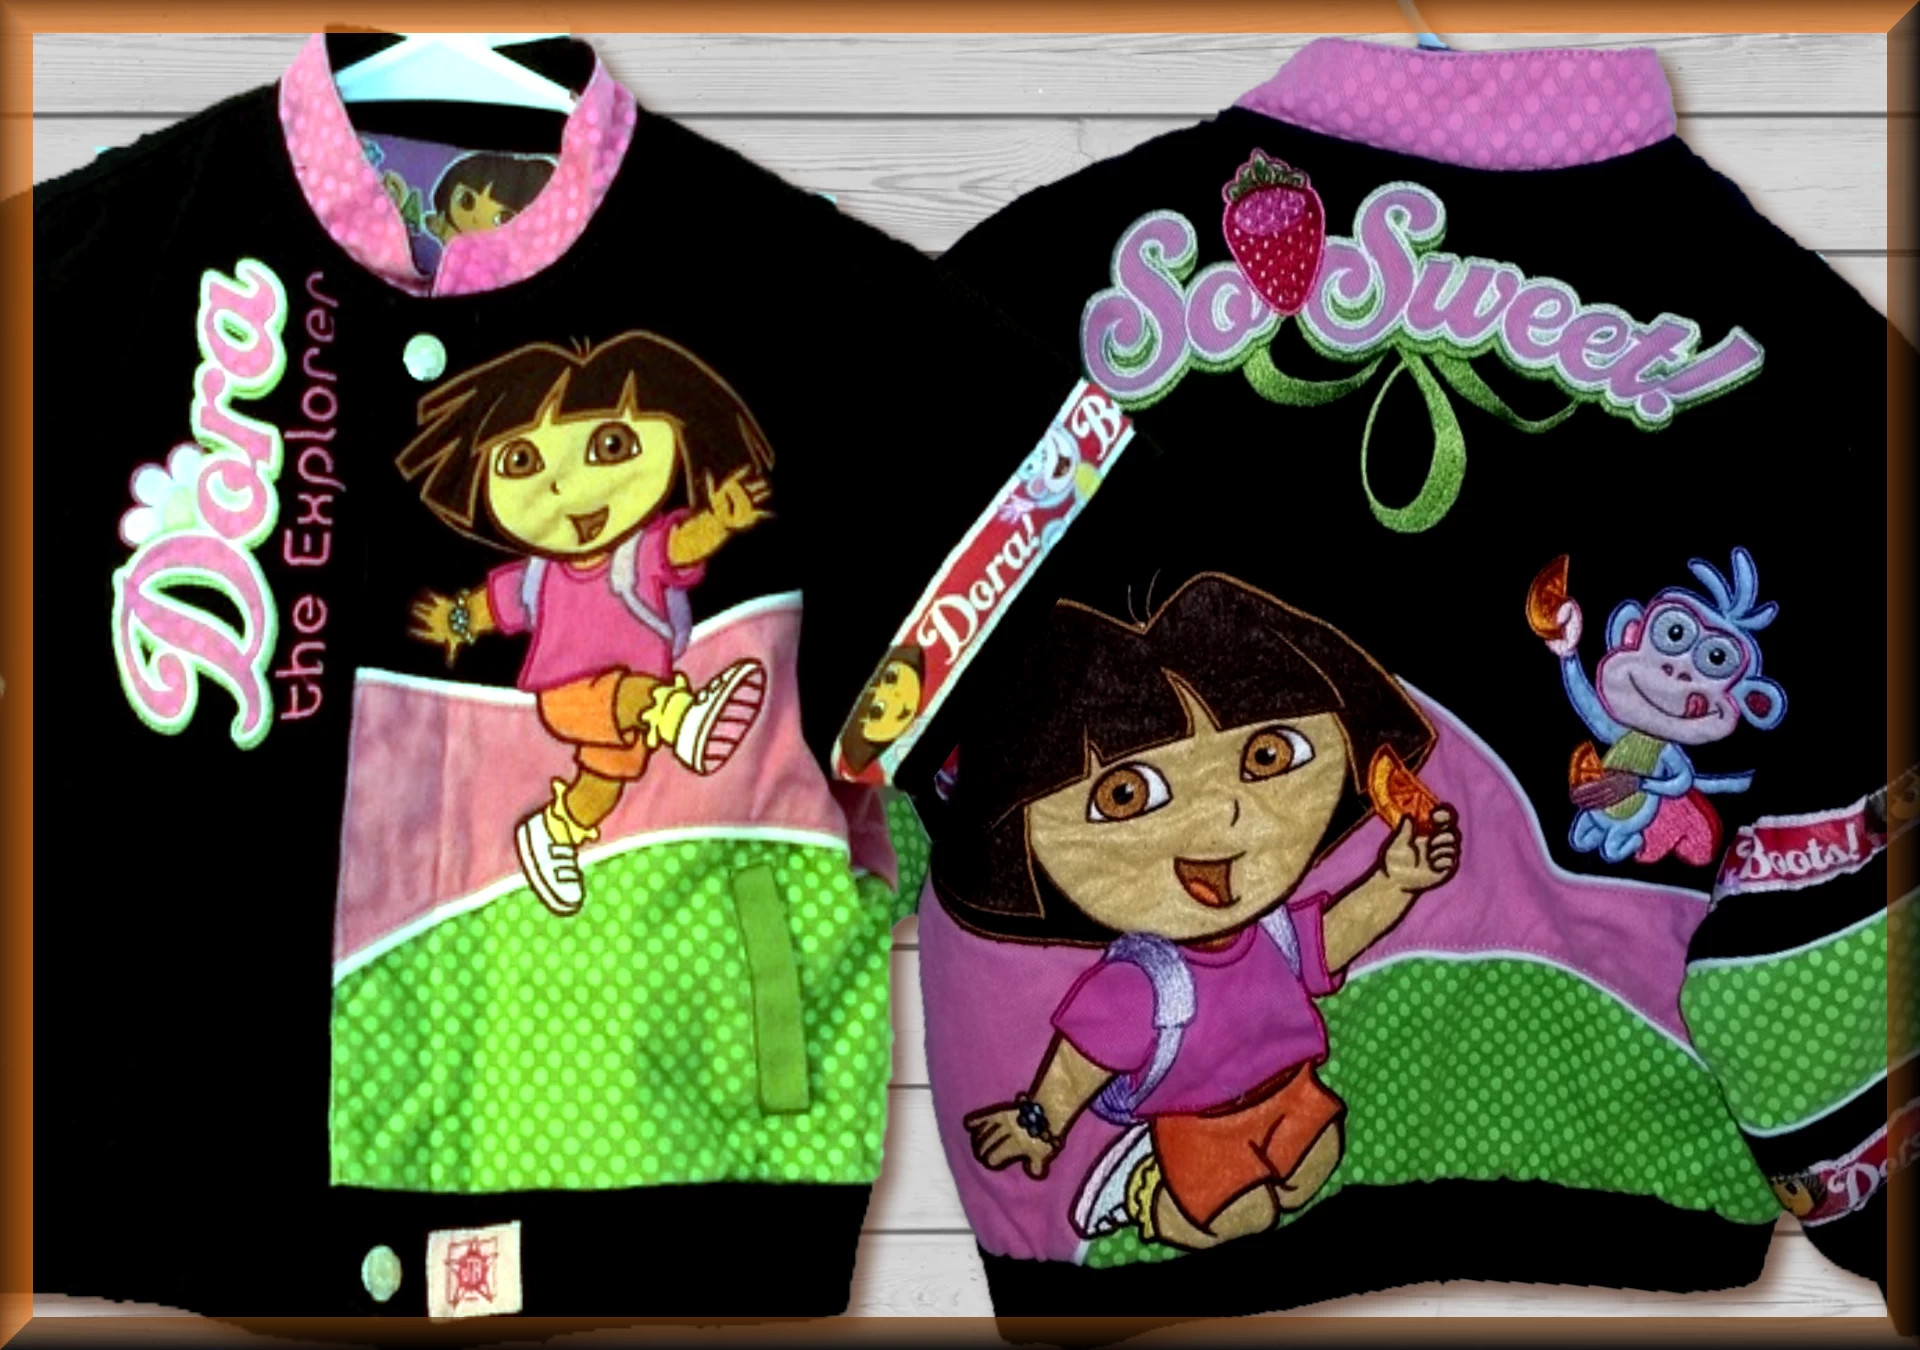 Dora So Sweet Kids Cartoon Character Jacket by JH Design - $